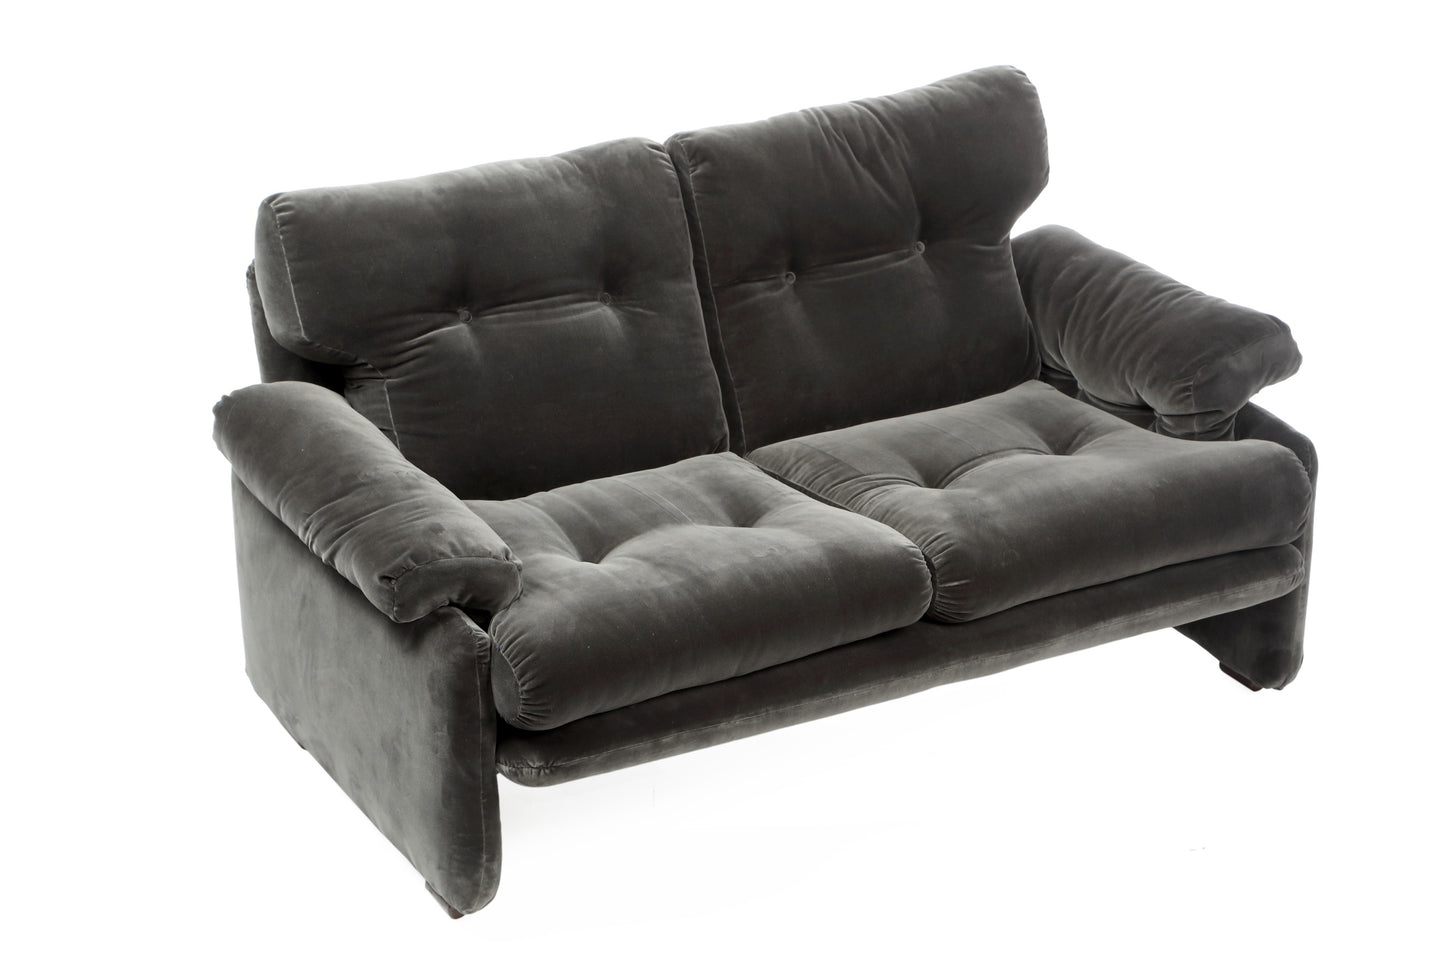 Afra &amp; Tobia Scarpa Coronado two-seater sofa in anthracite velvet